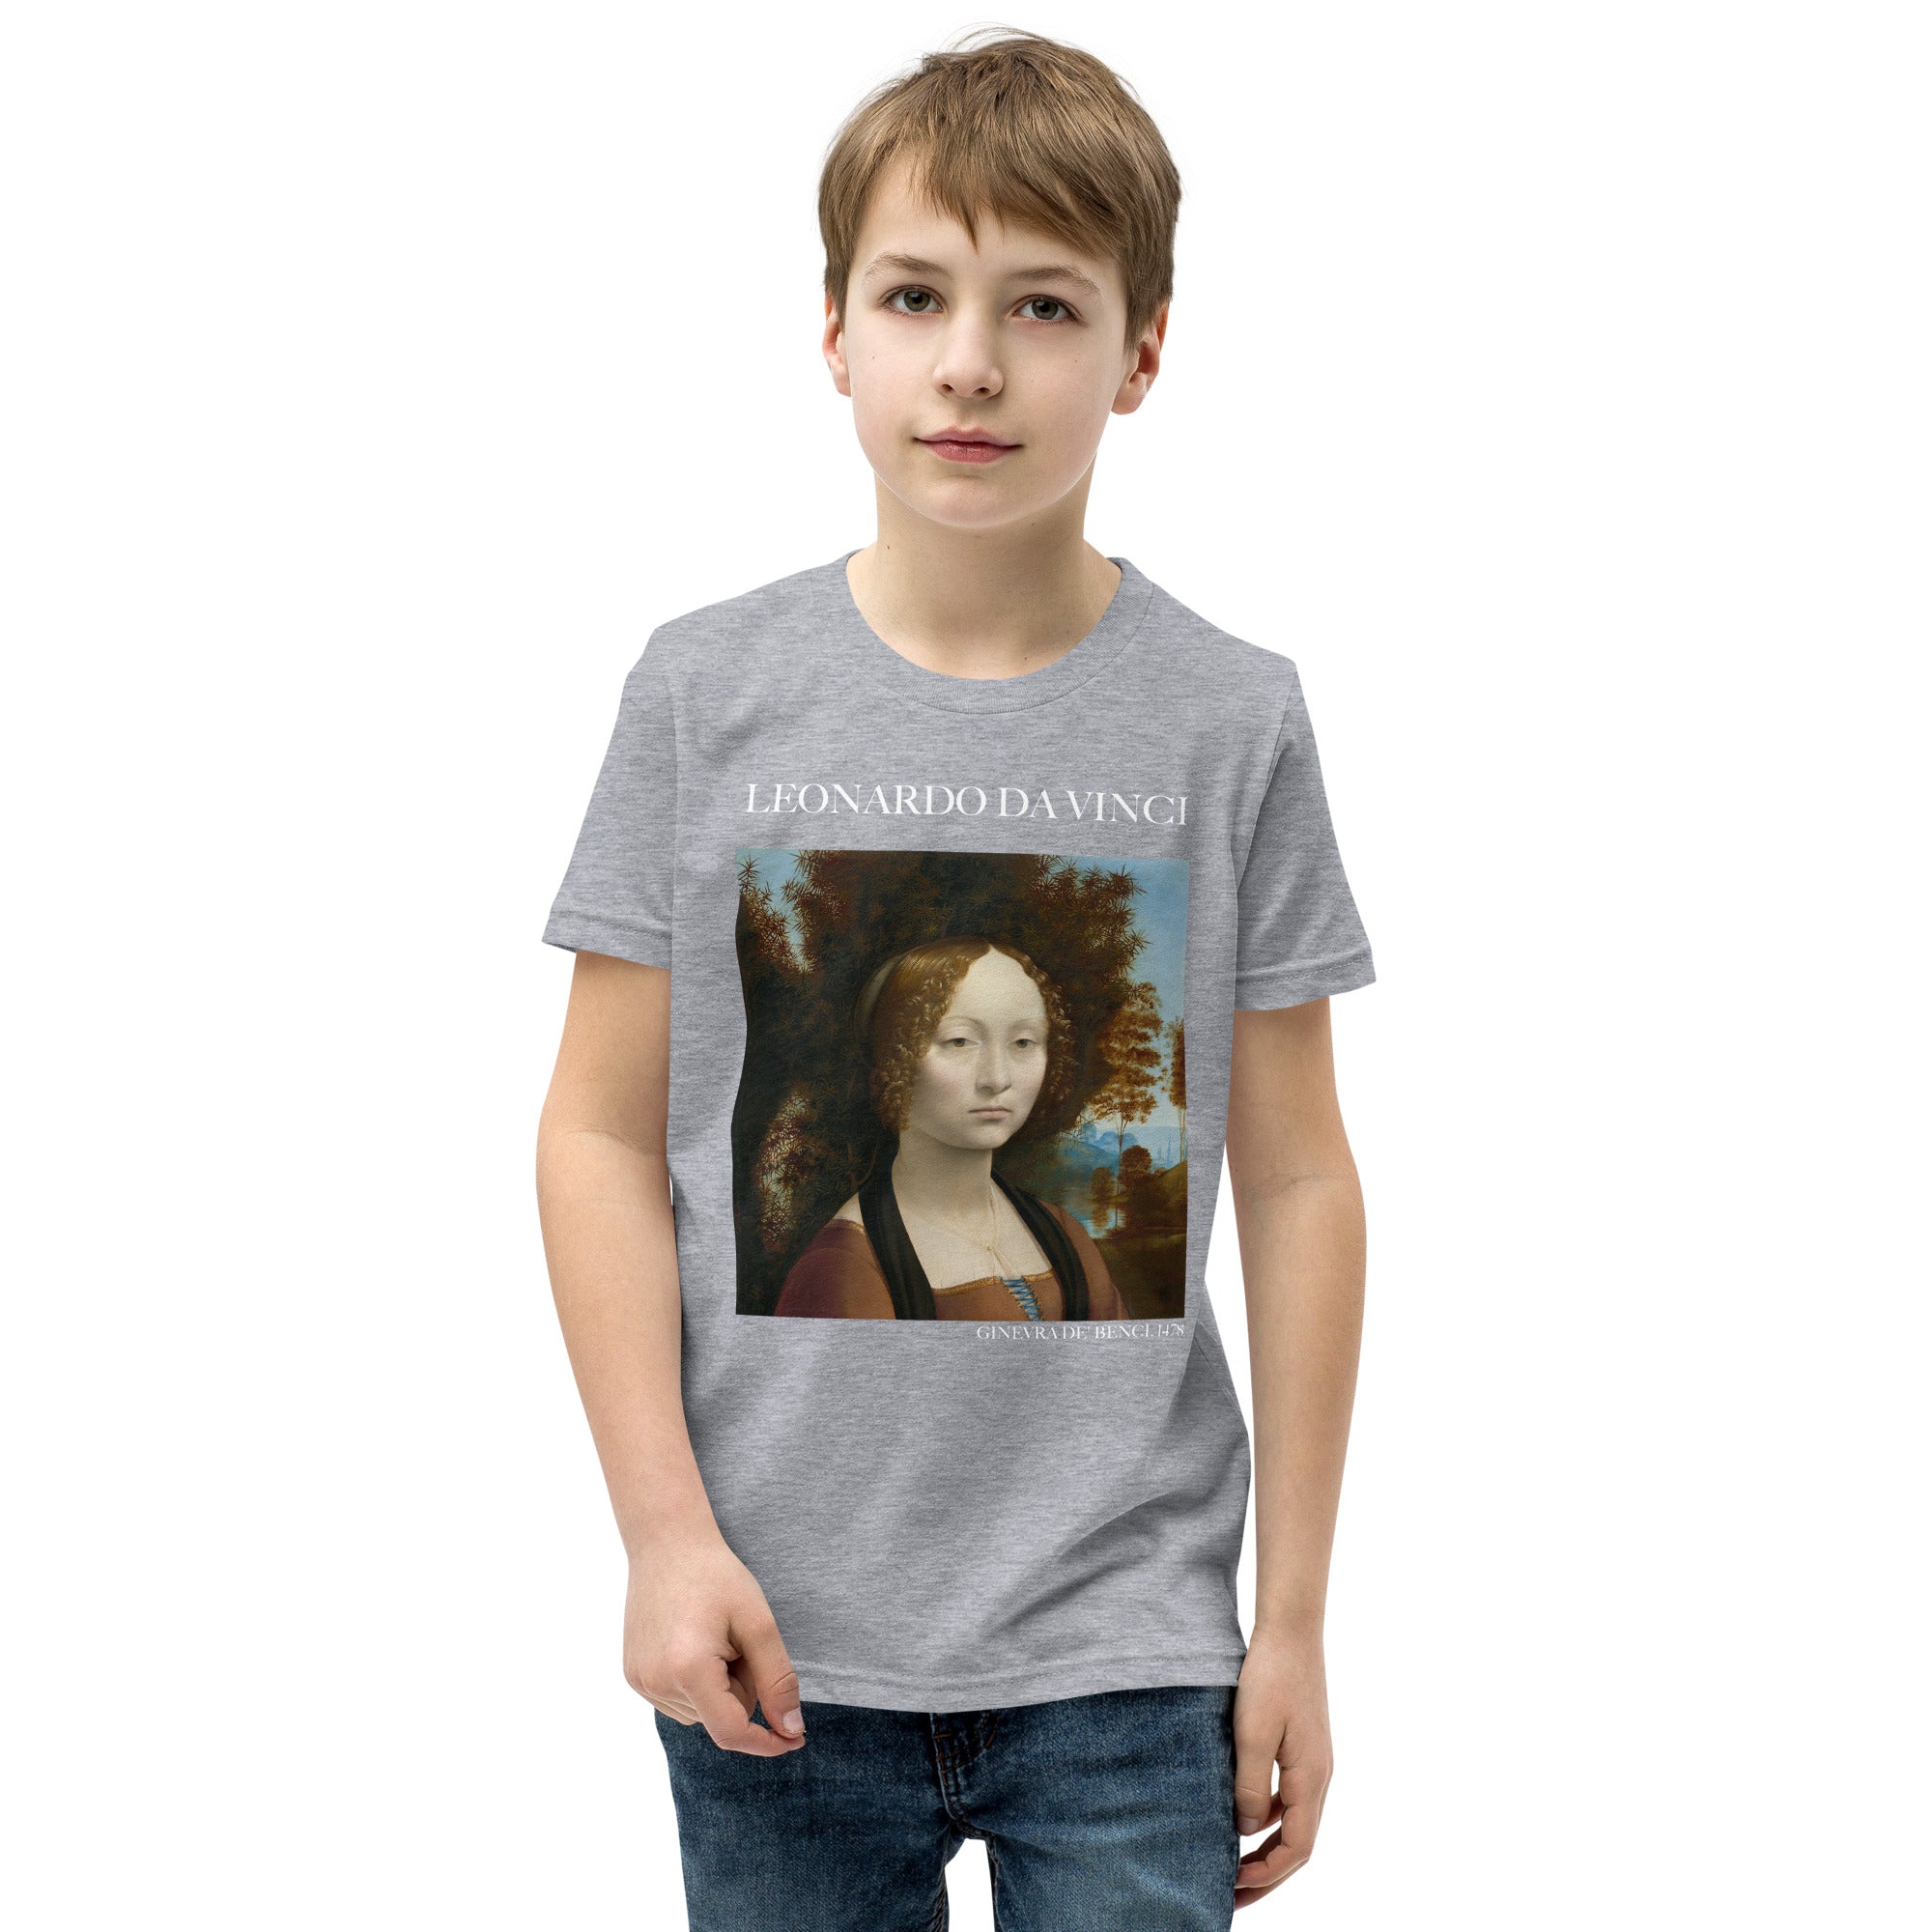 Leonardo da Vinci 'Ginevra de' Benci' Famous Painting Short Sleeve T-Shirt | Premium Youth Art Tee